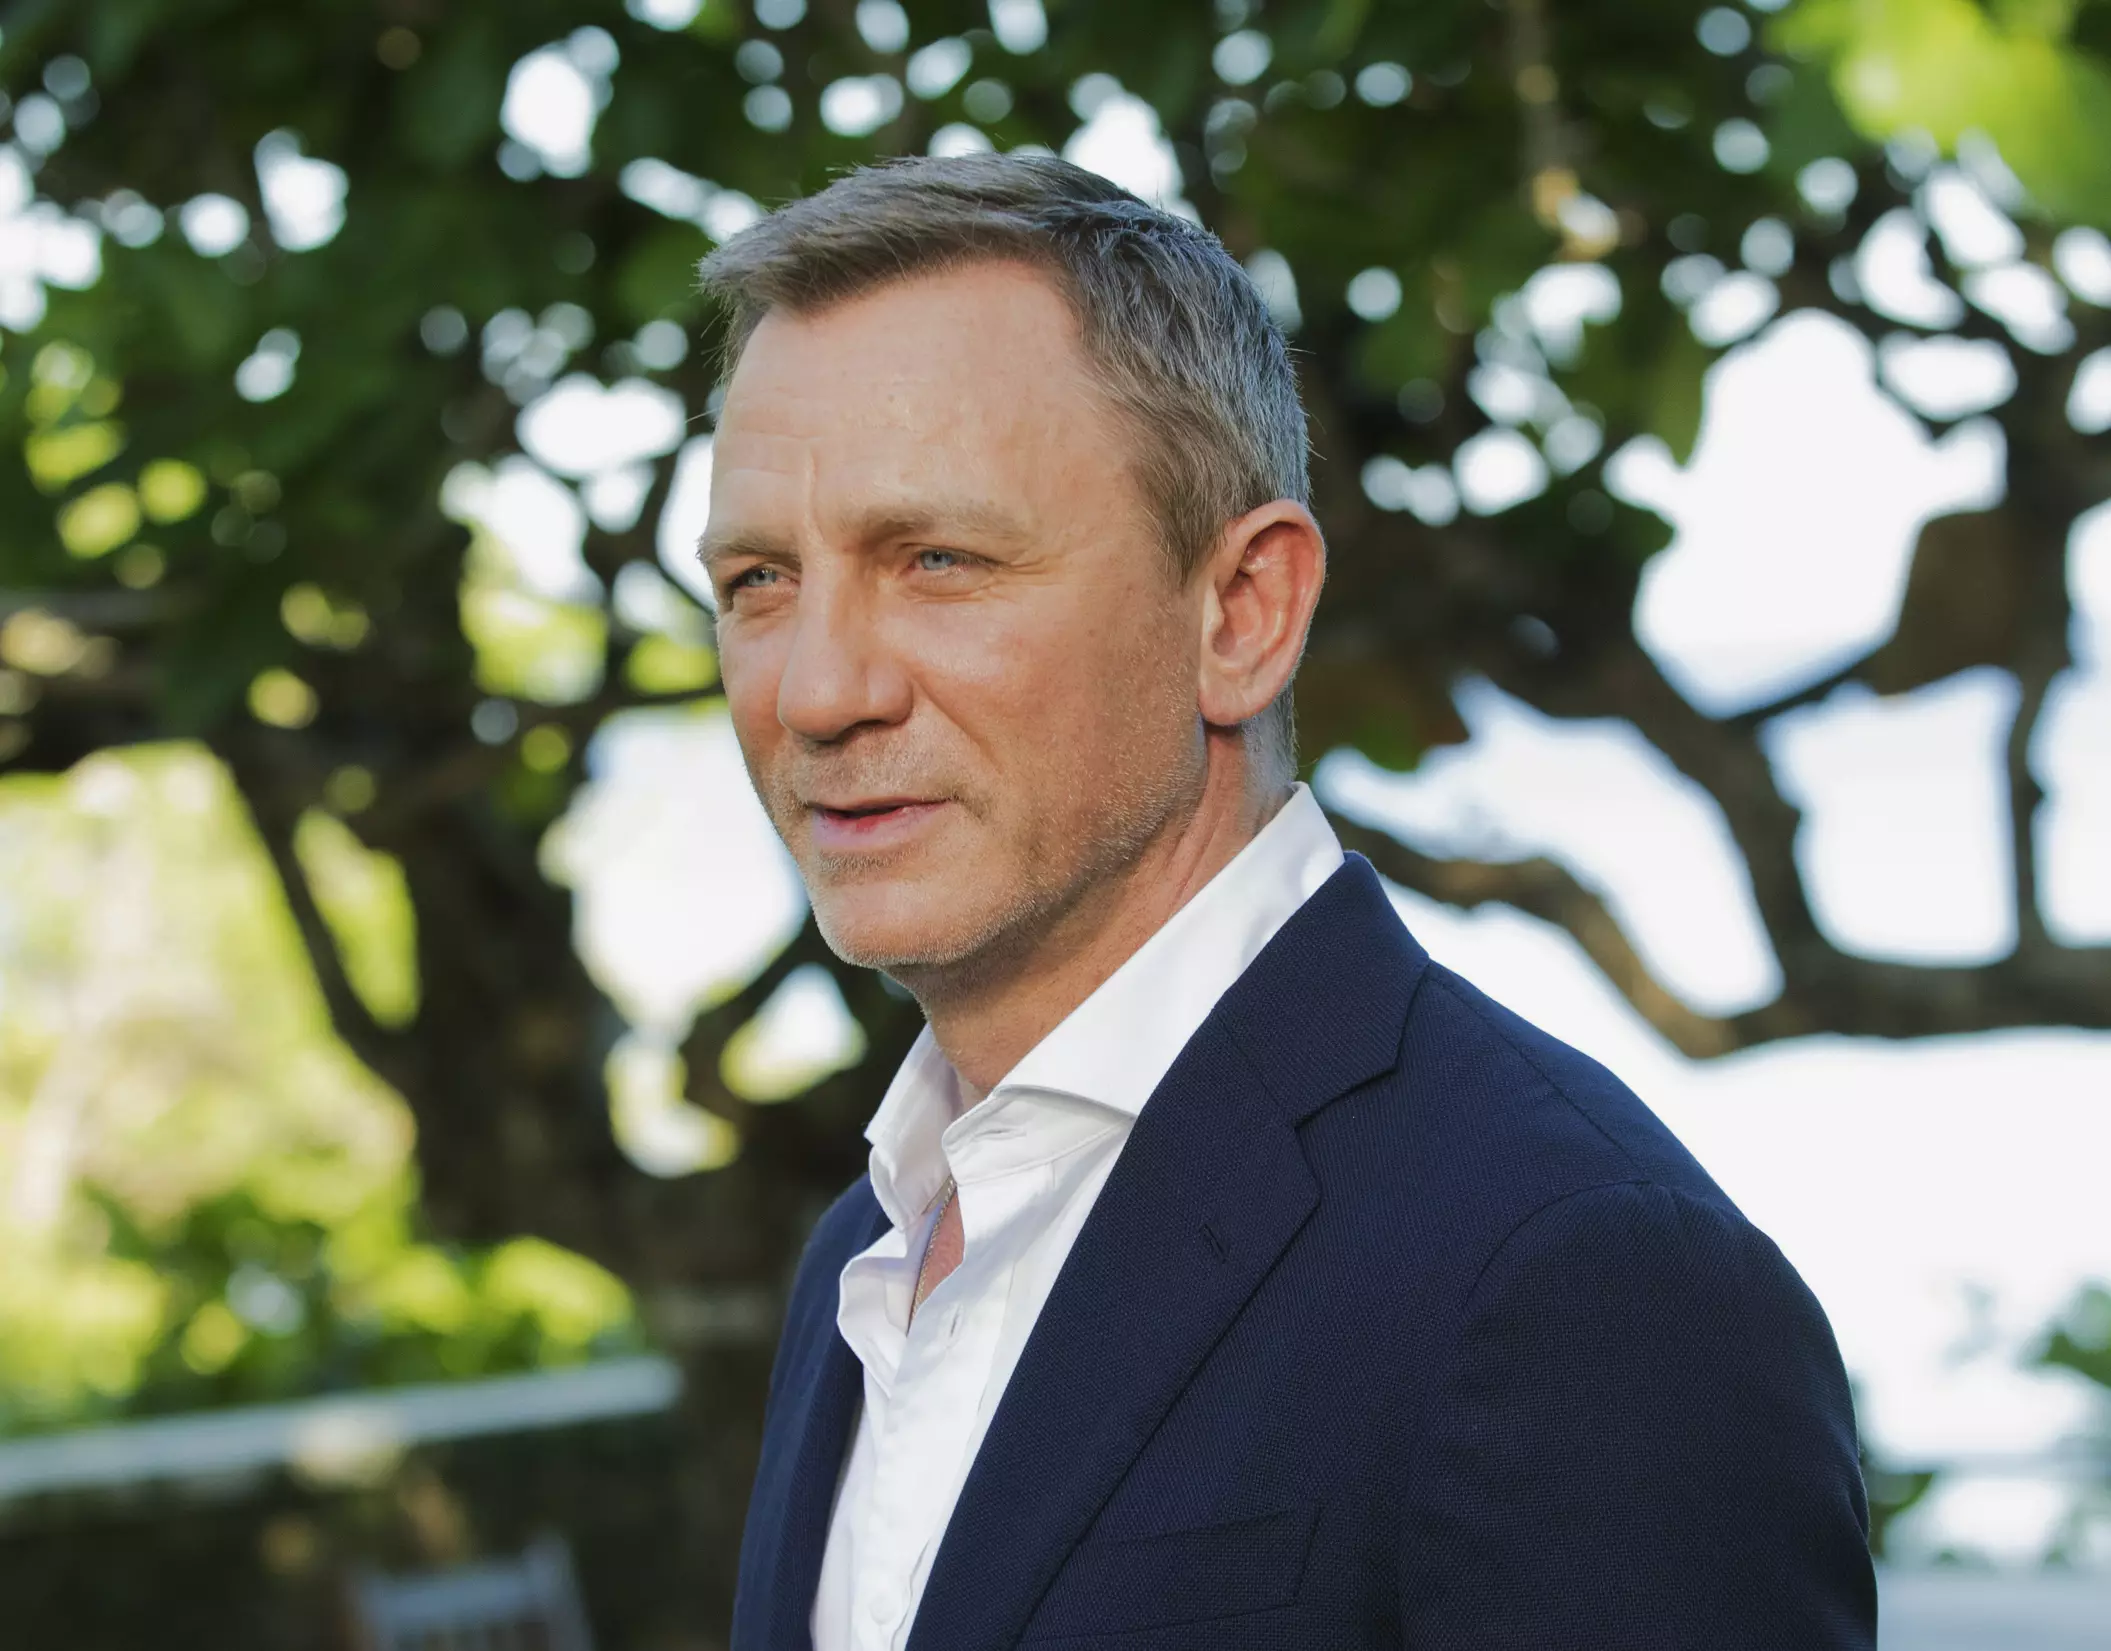 Daniel Craig will star in his last Bond film.